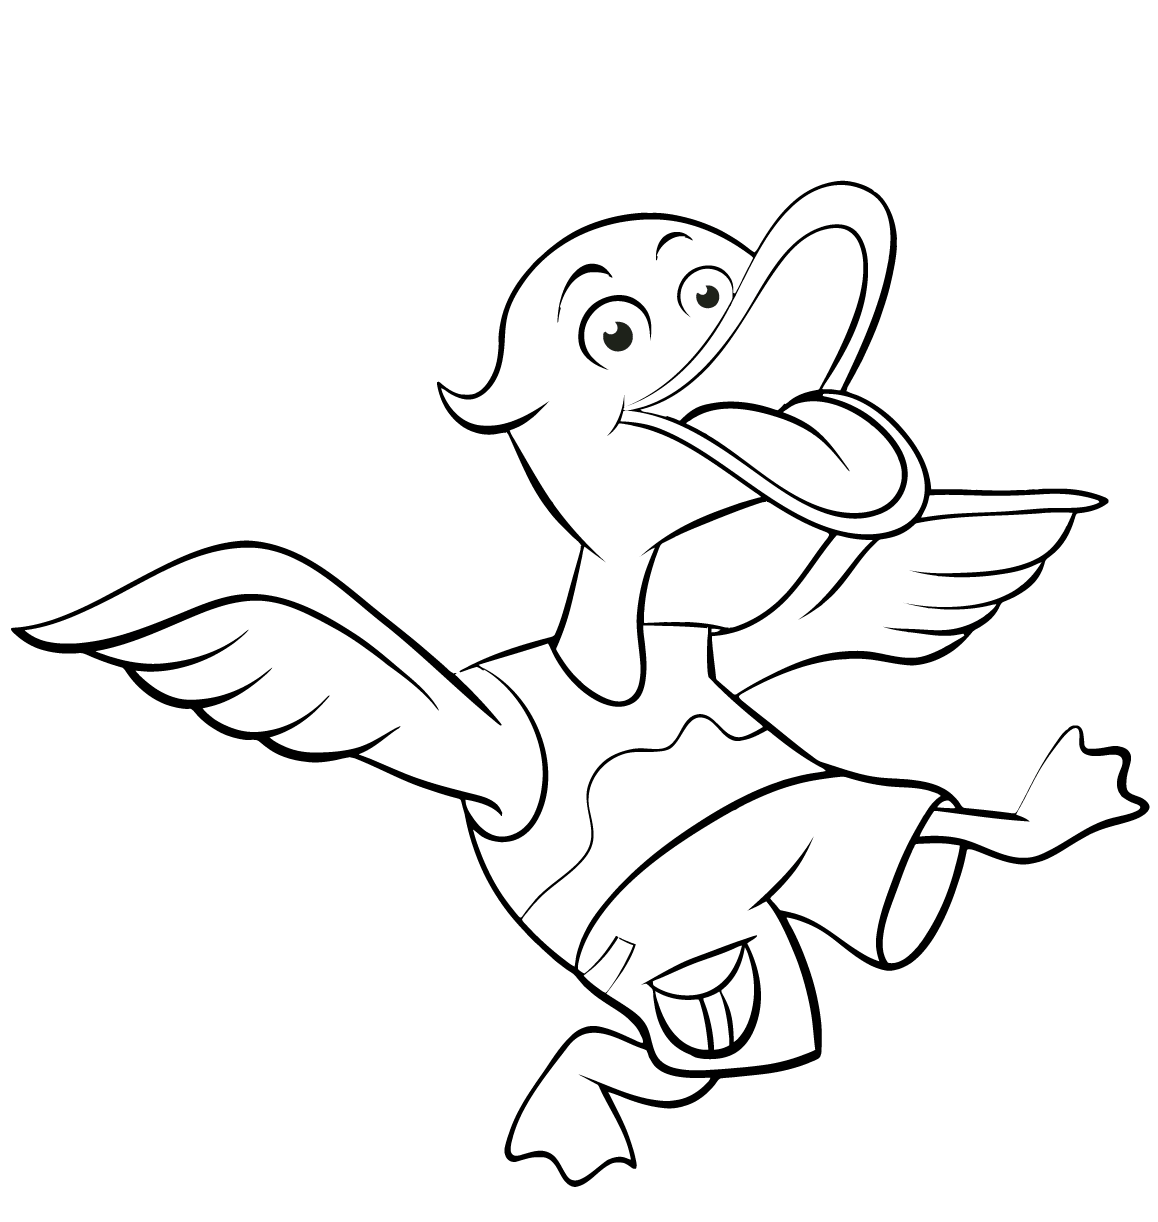 Funny Cartoon duck Coloring Page